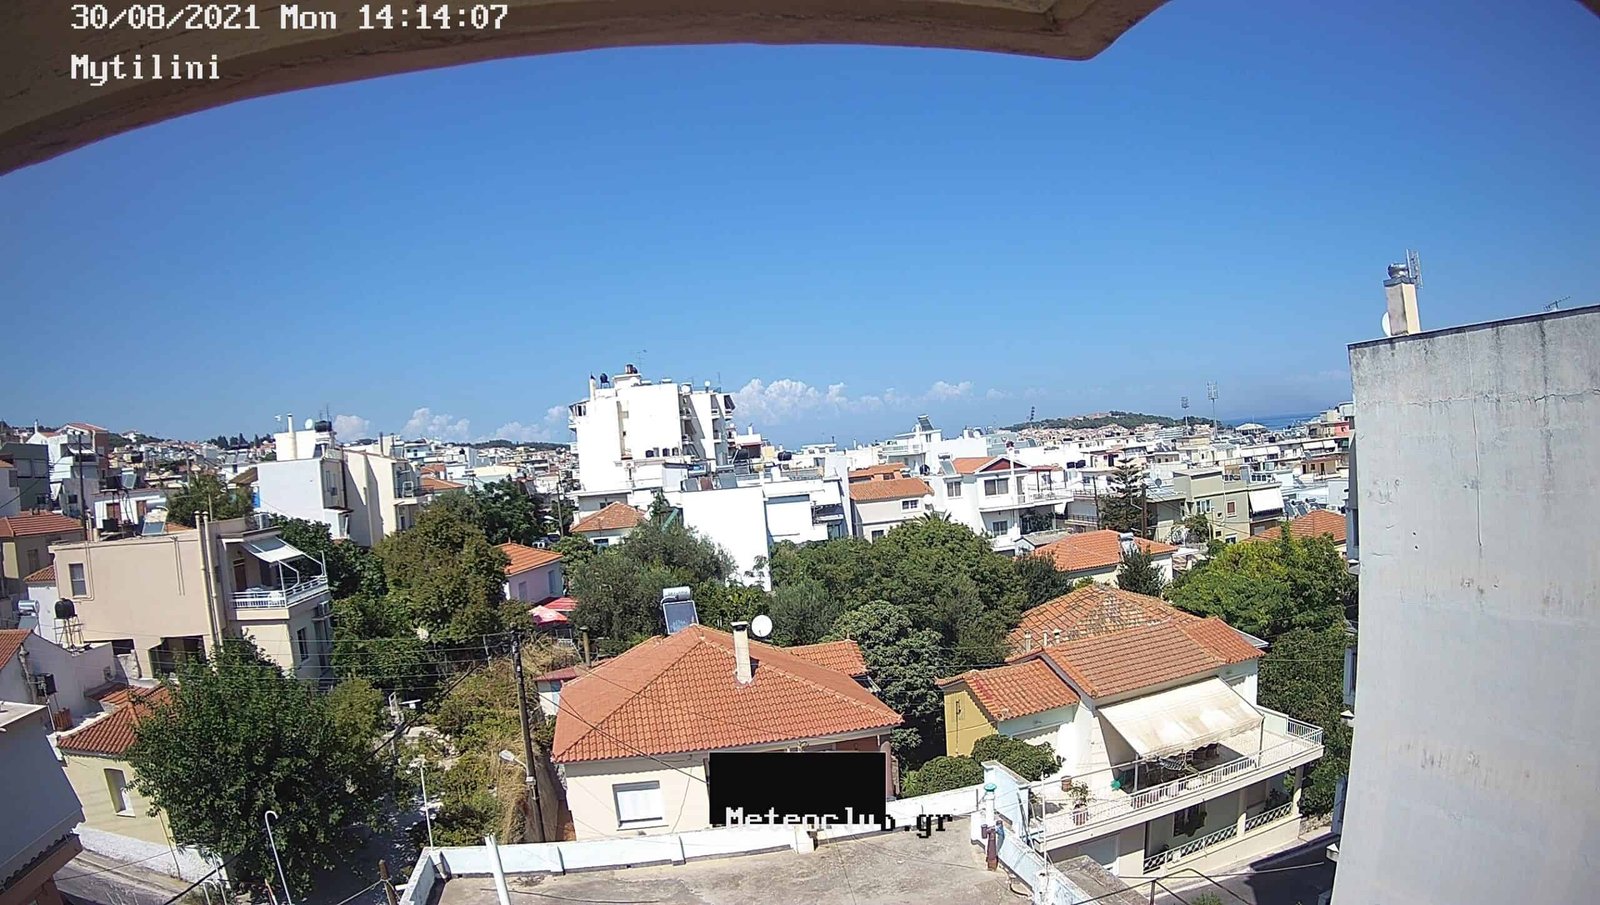 Yunanistan Midilli Canlı Kamera Mobese izle